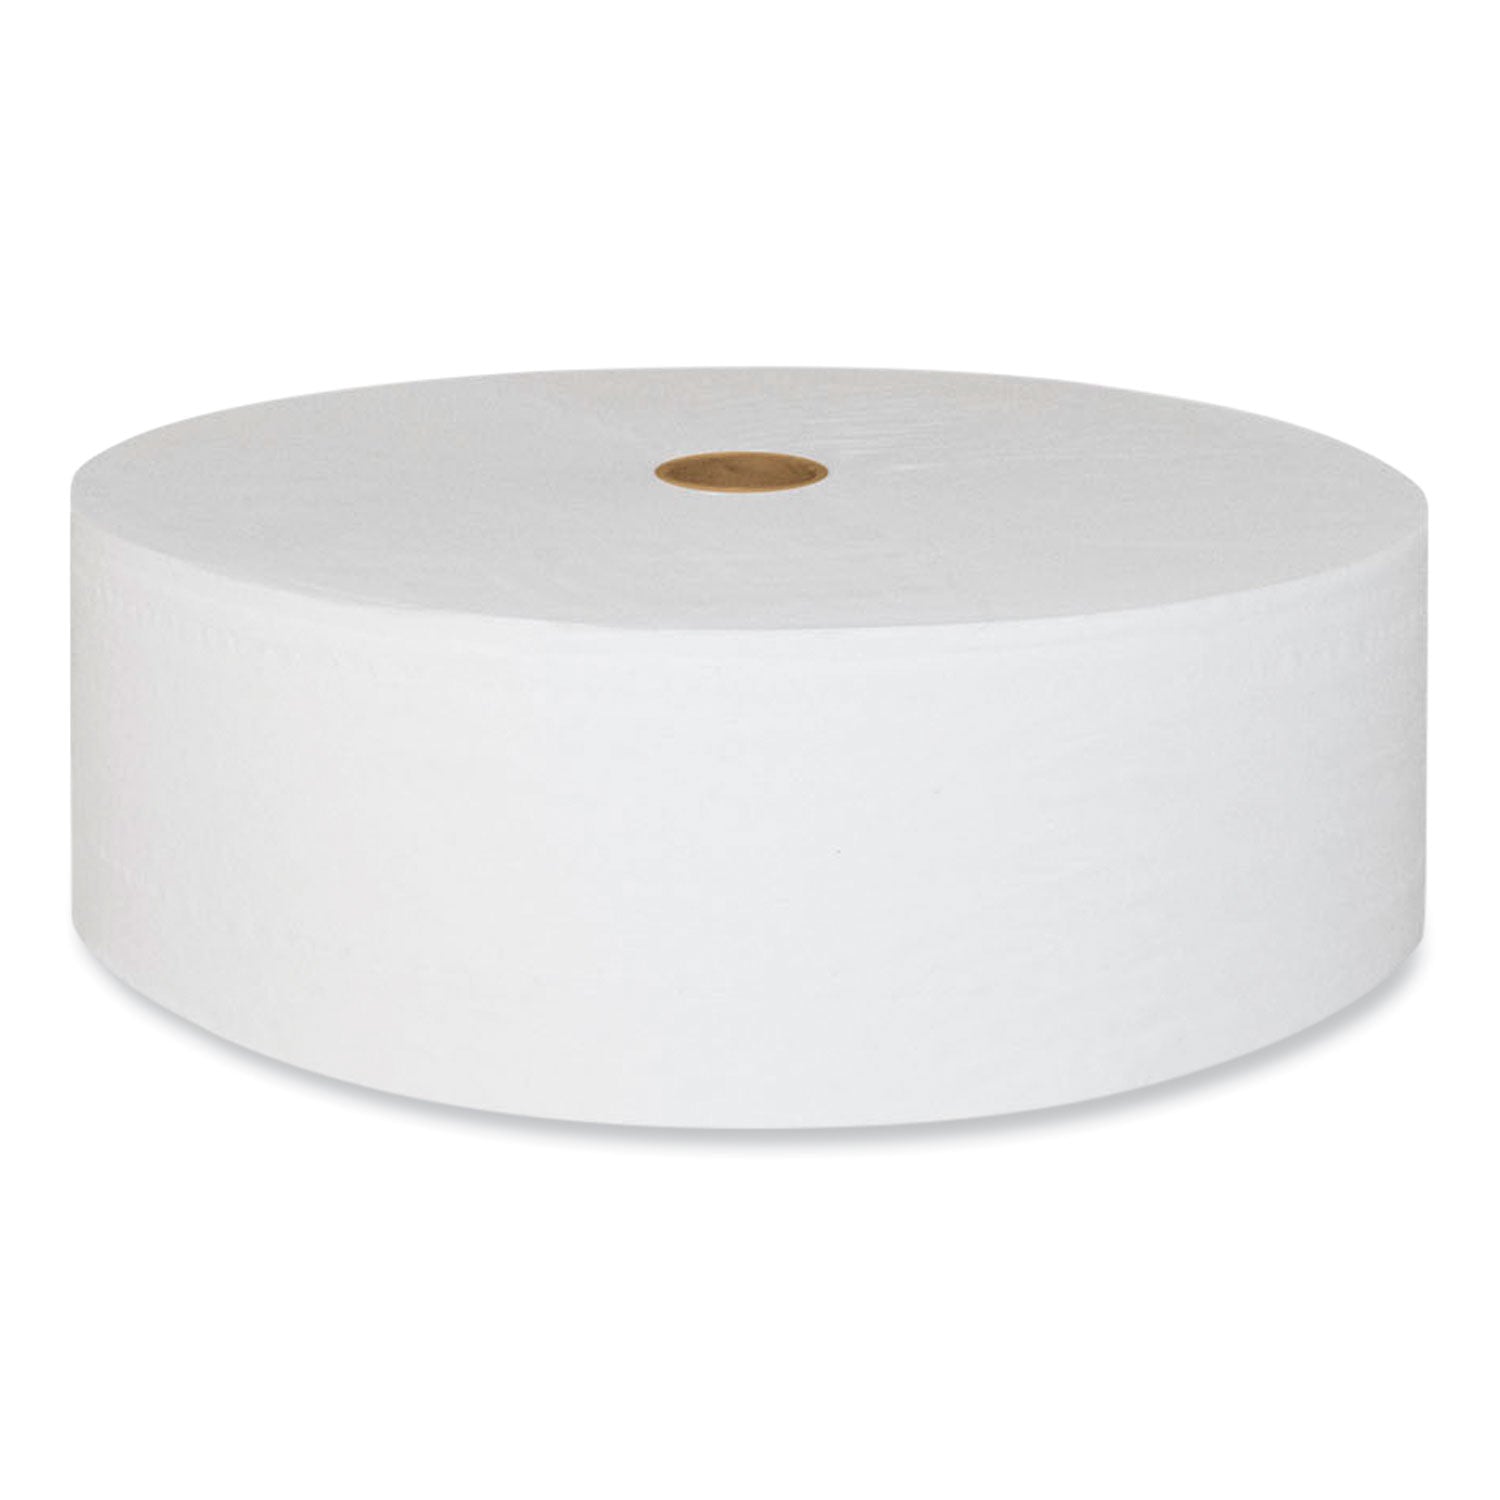 small-core-bath-tissue-septic-safe-2-ply-white-1200-sheets-roll-12-rolls-carton_morvt1200 - 4